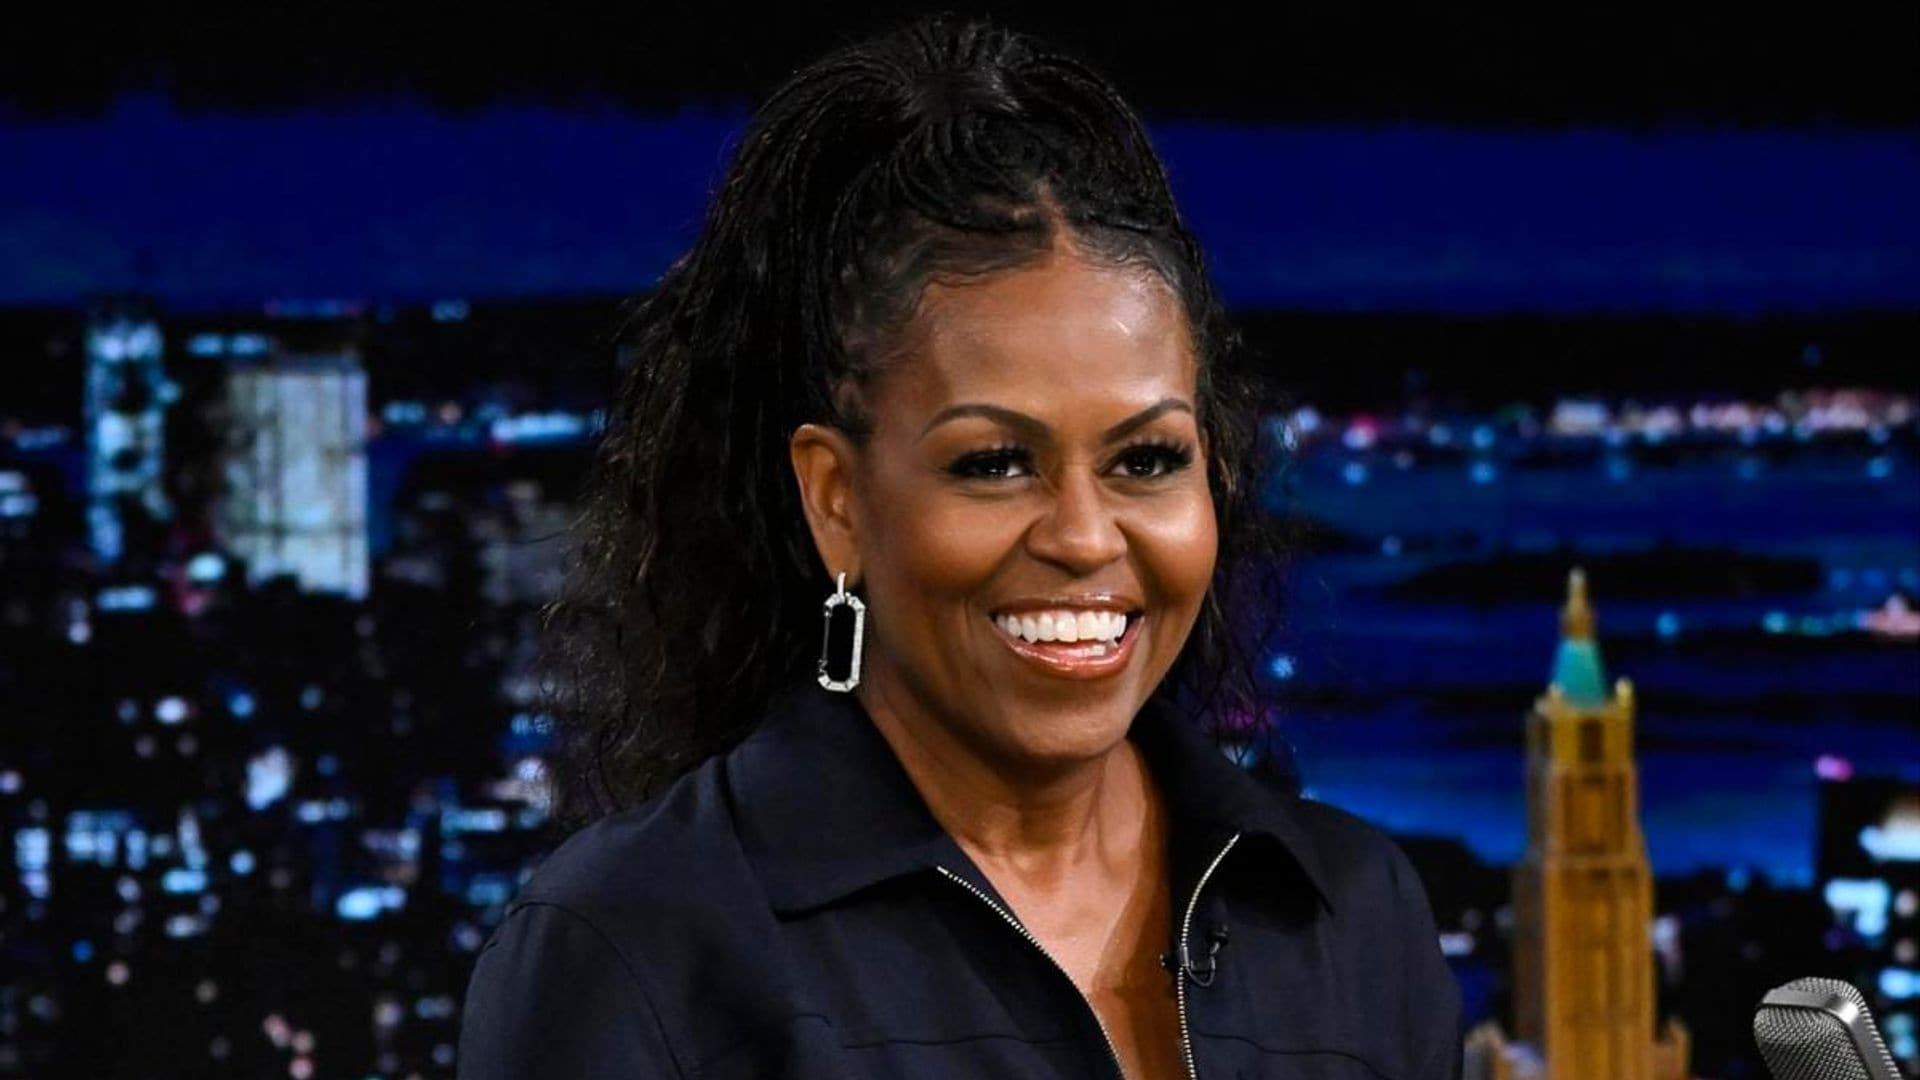 Michelle Obama’s inspirational insights on motherhood